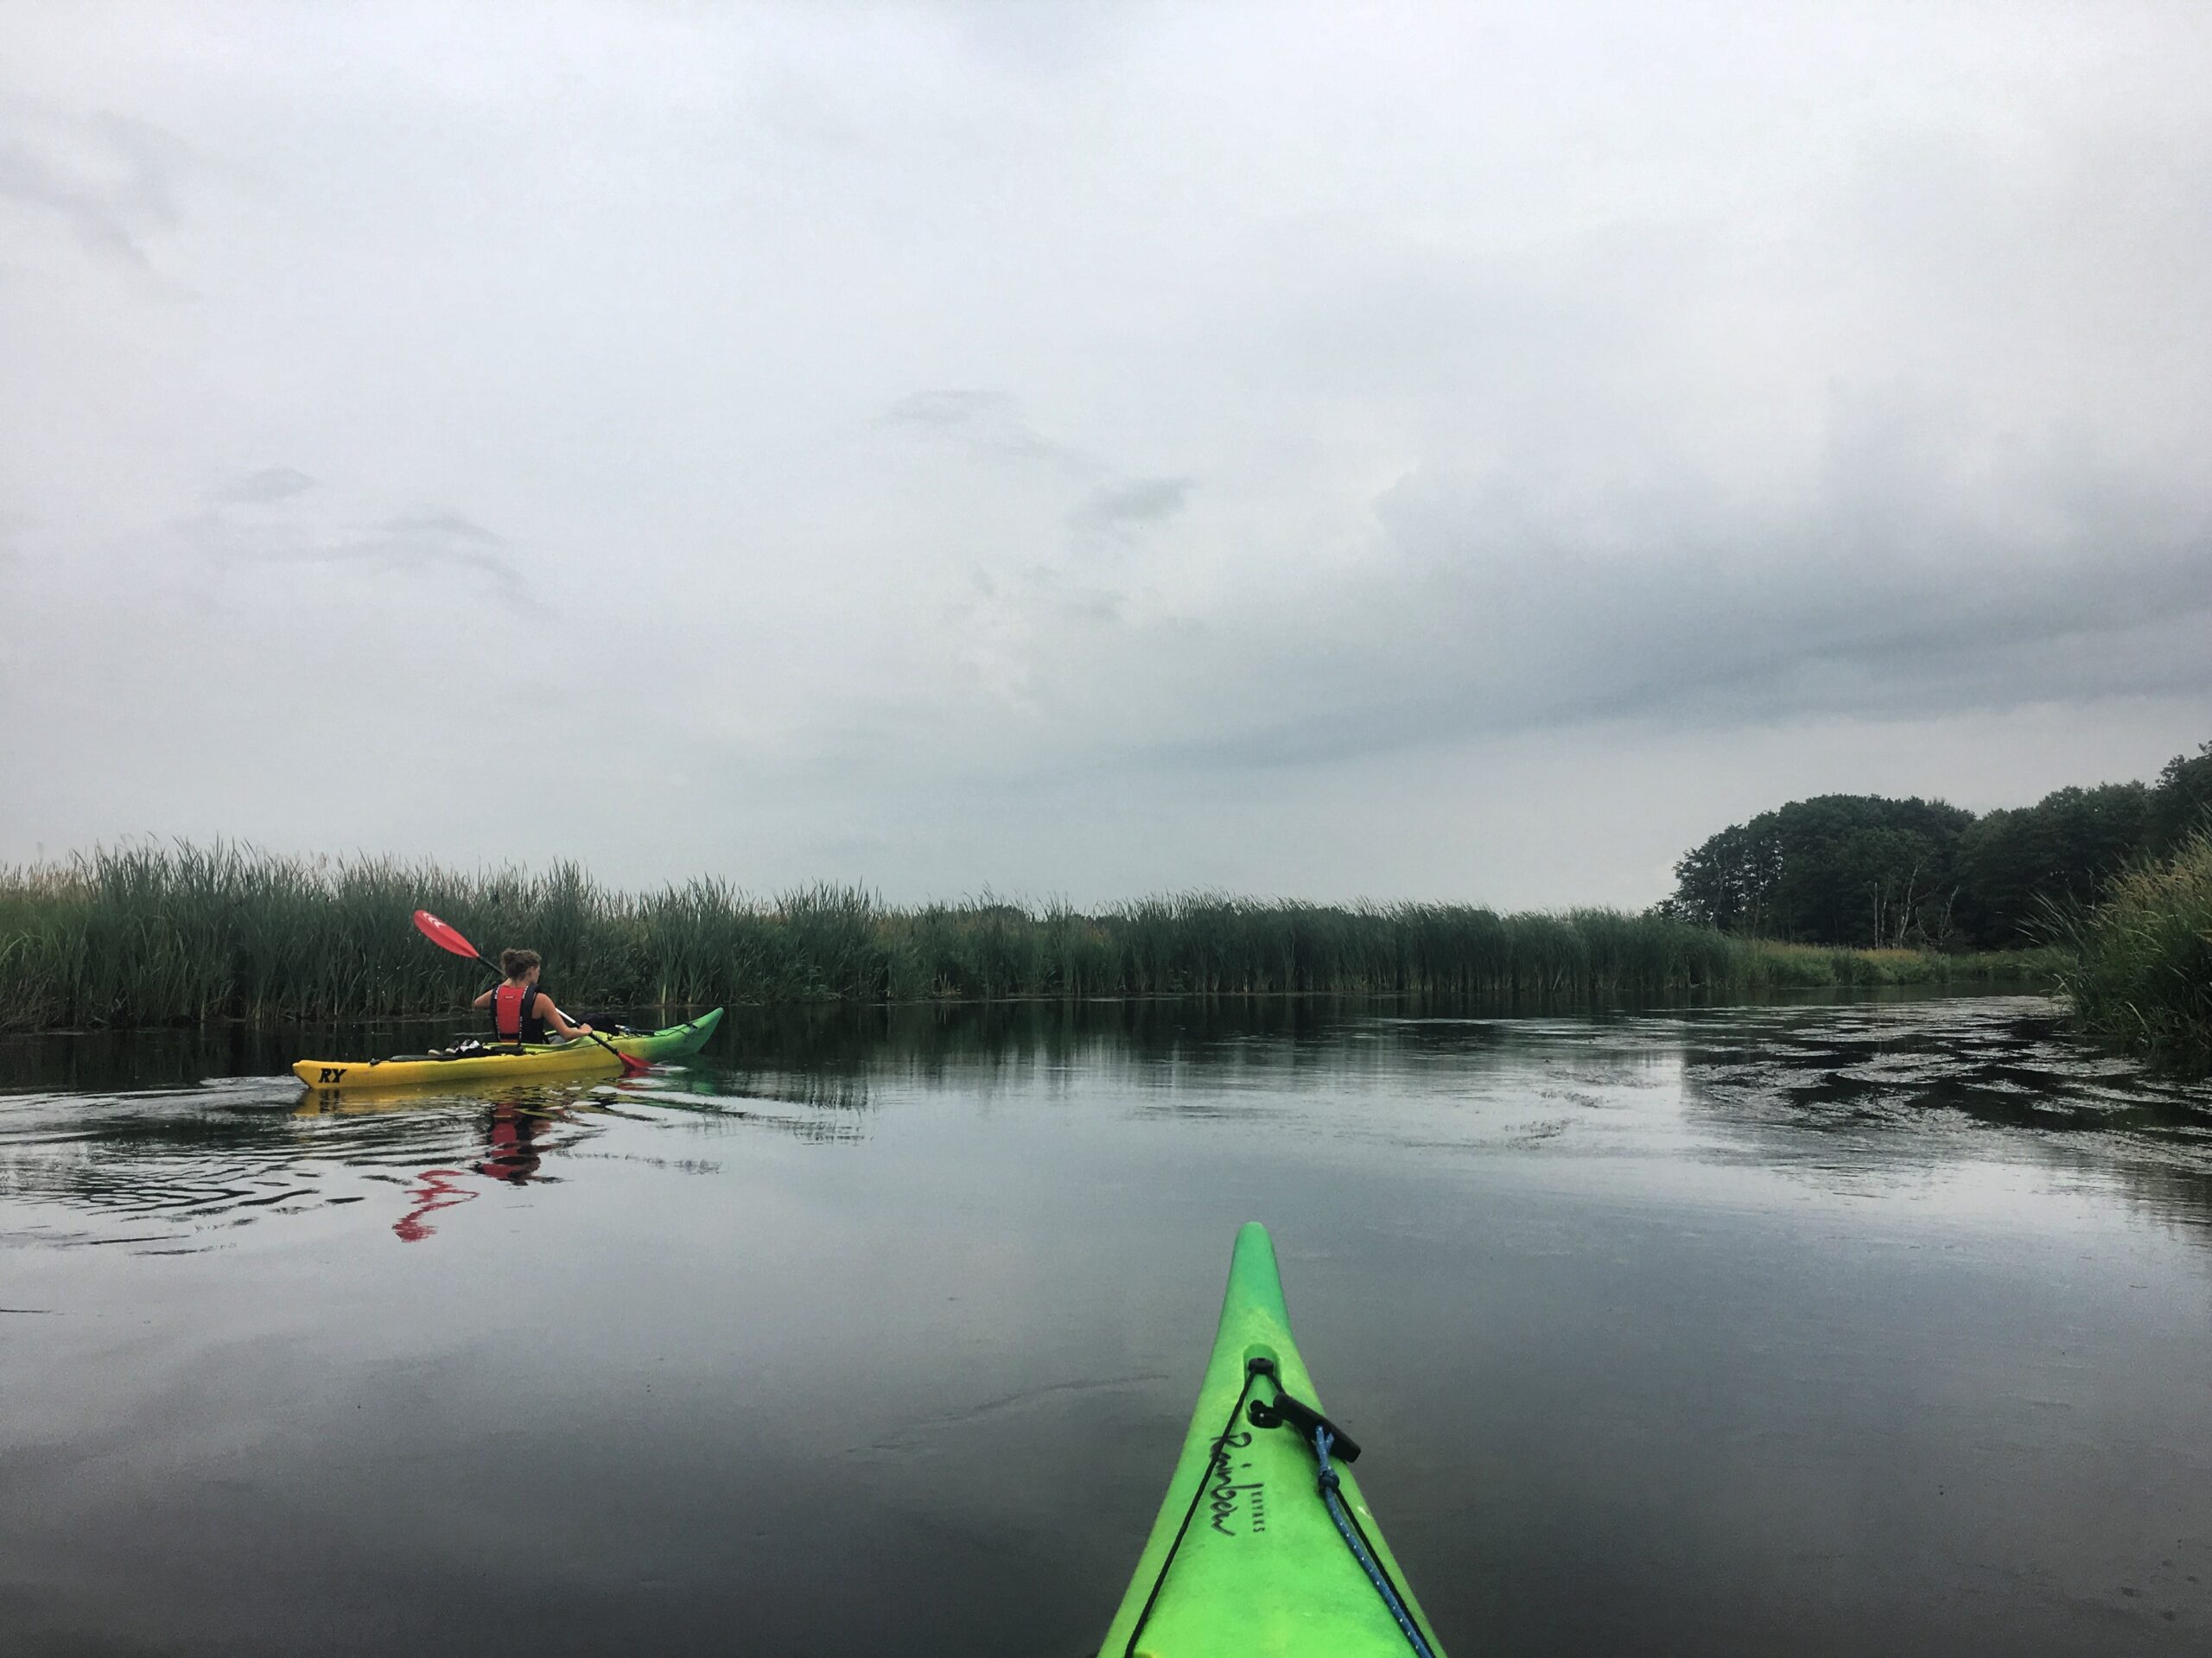 A kayaker paddles the River Guden